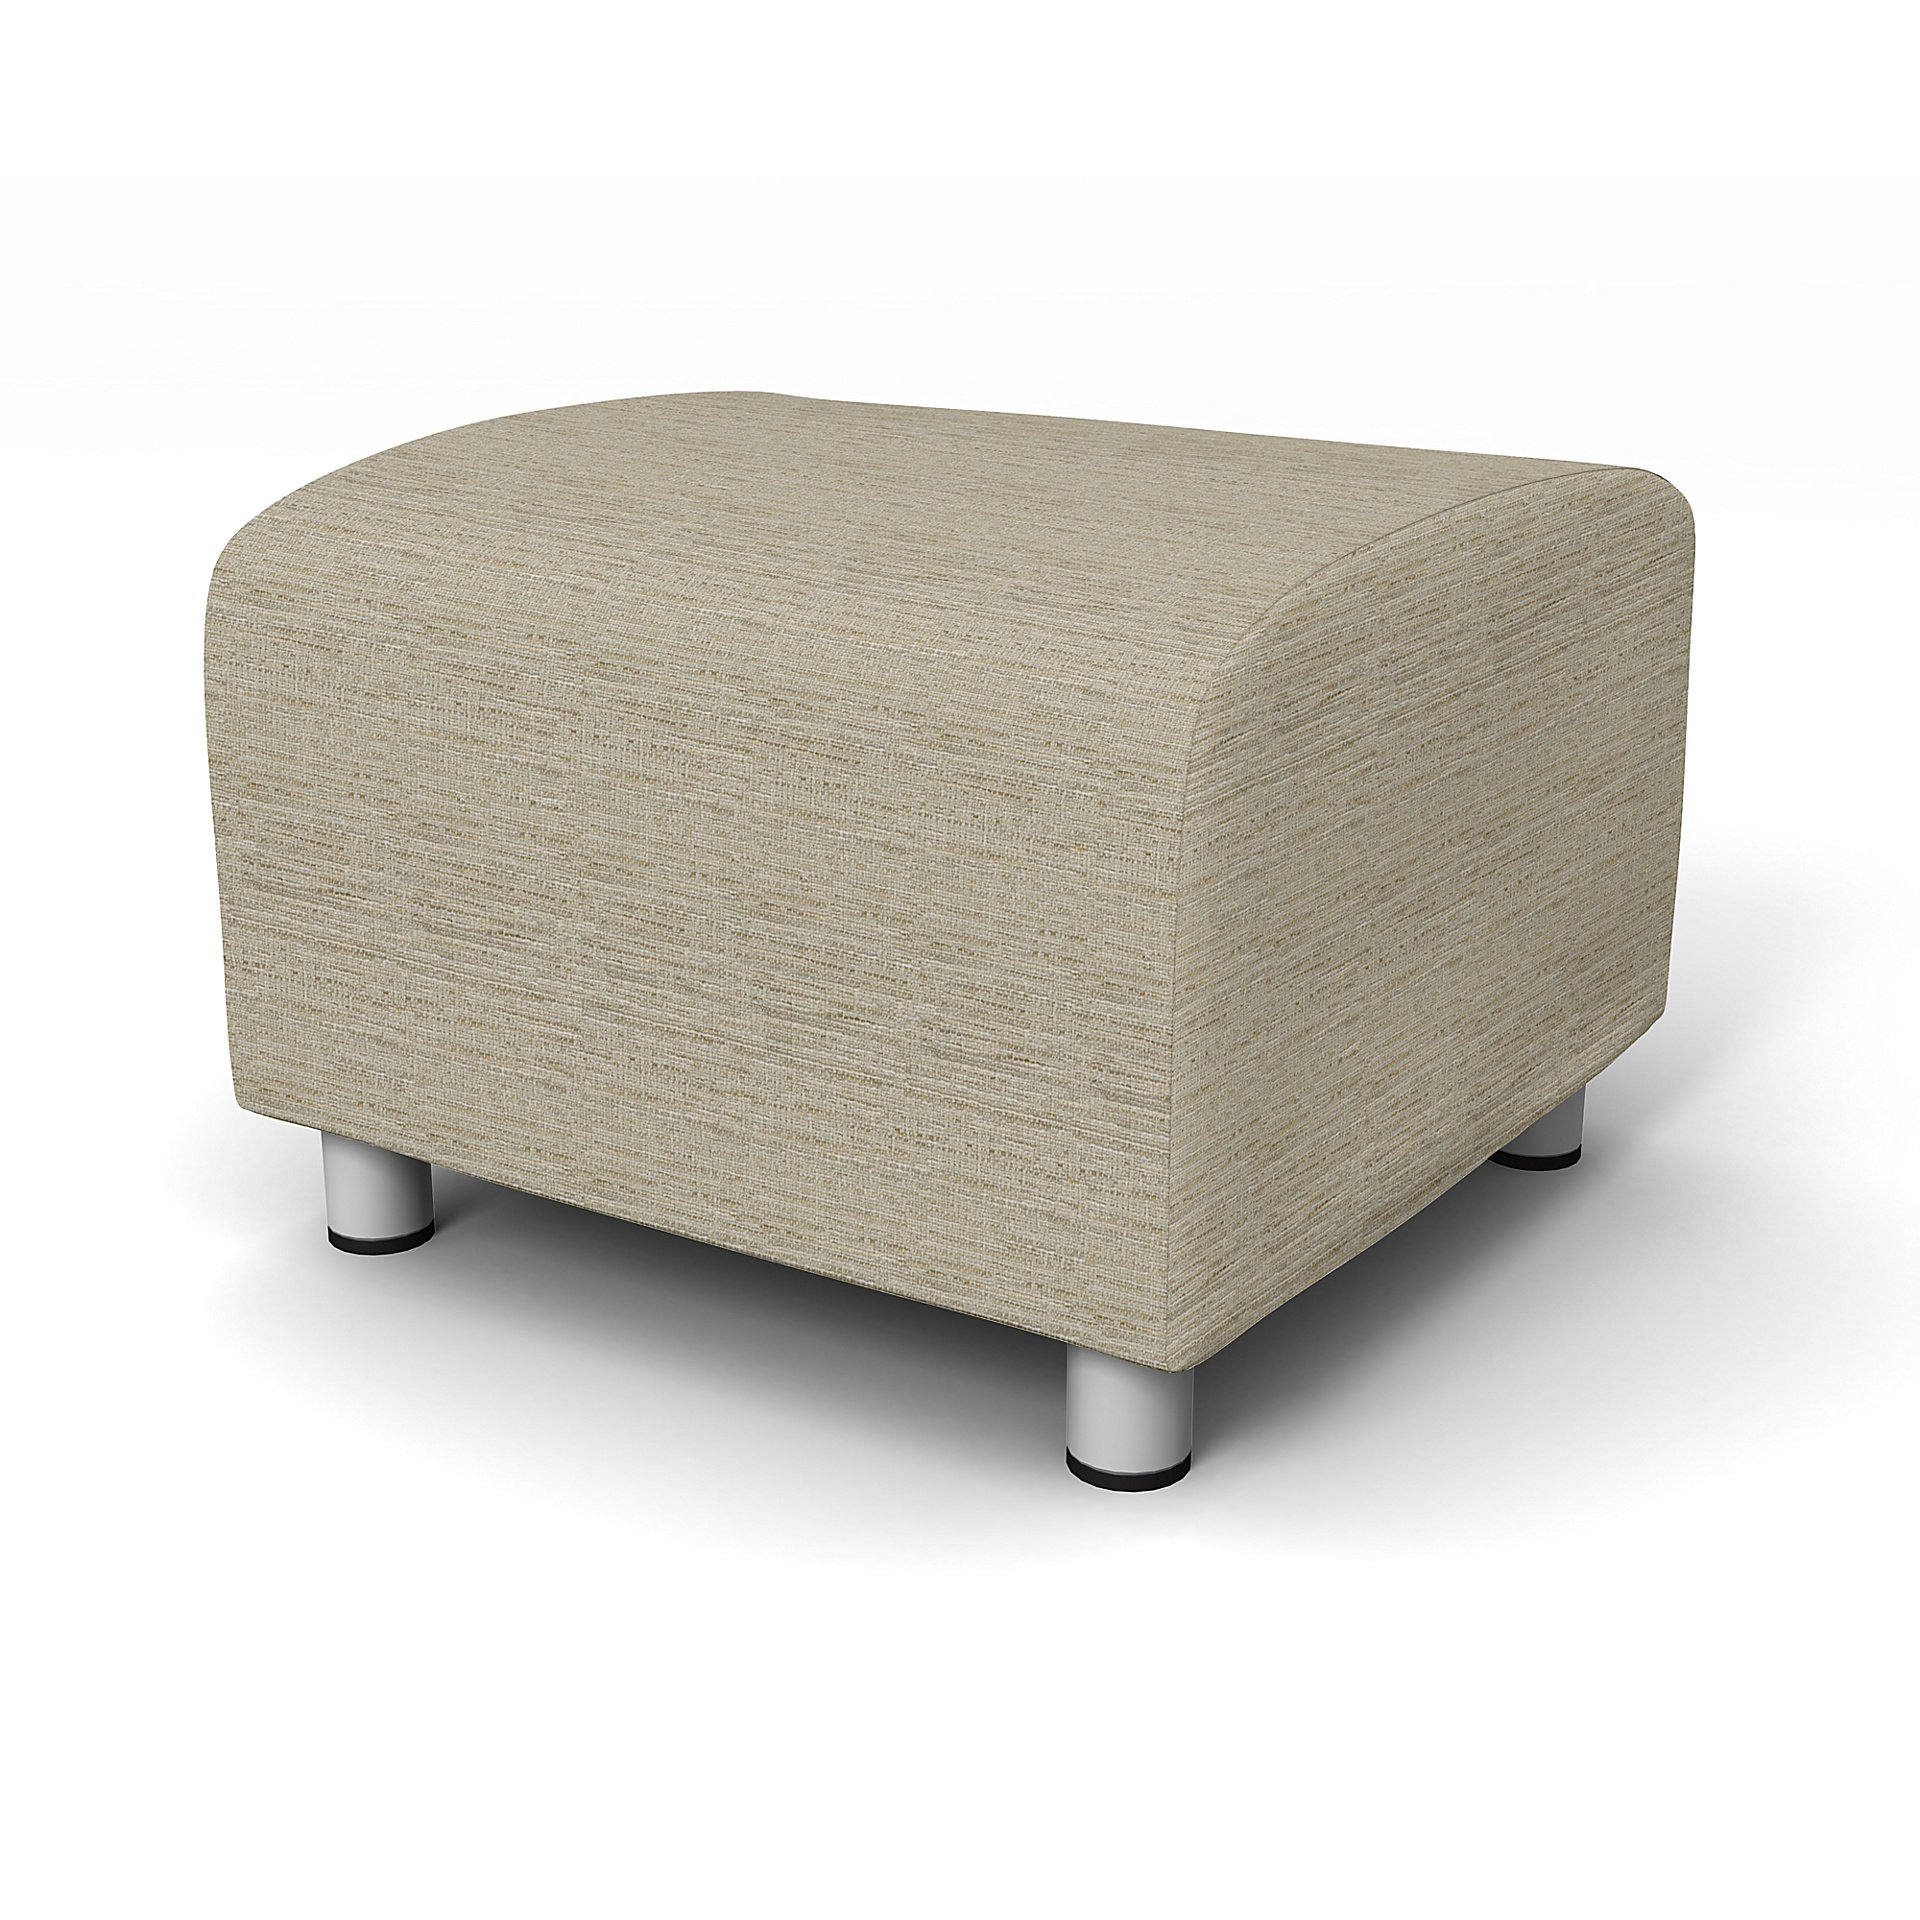 IKEA - Klippan Footstool Cover, Light Sand, Boucle & Texture - Bemz